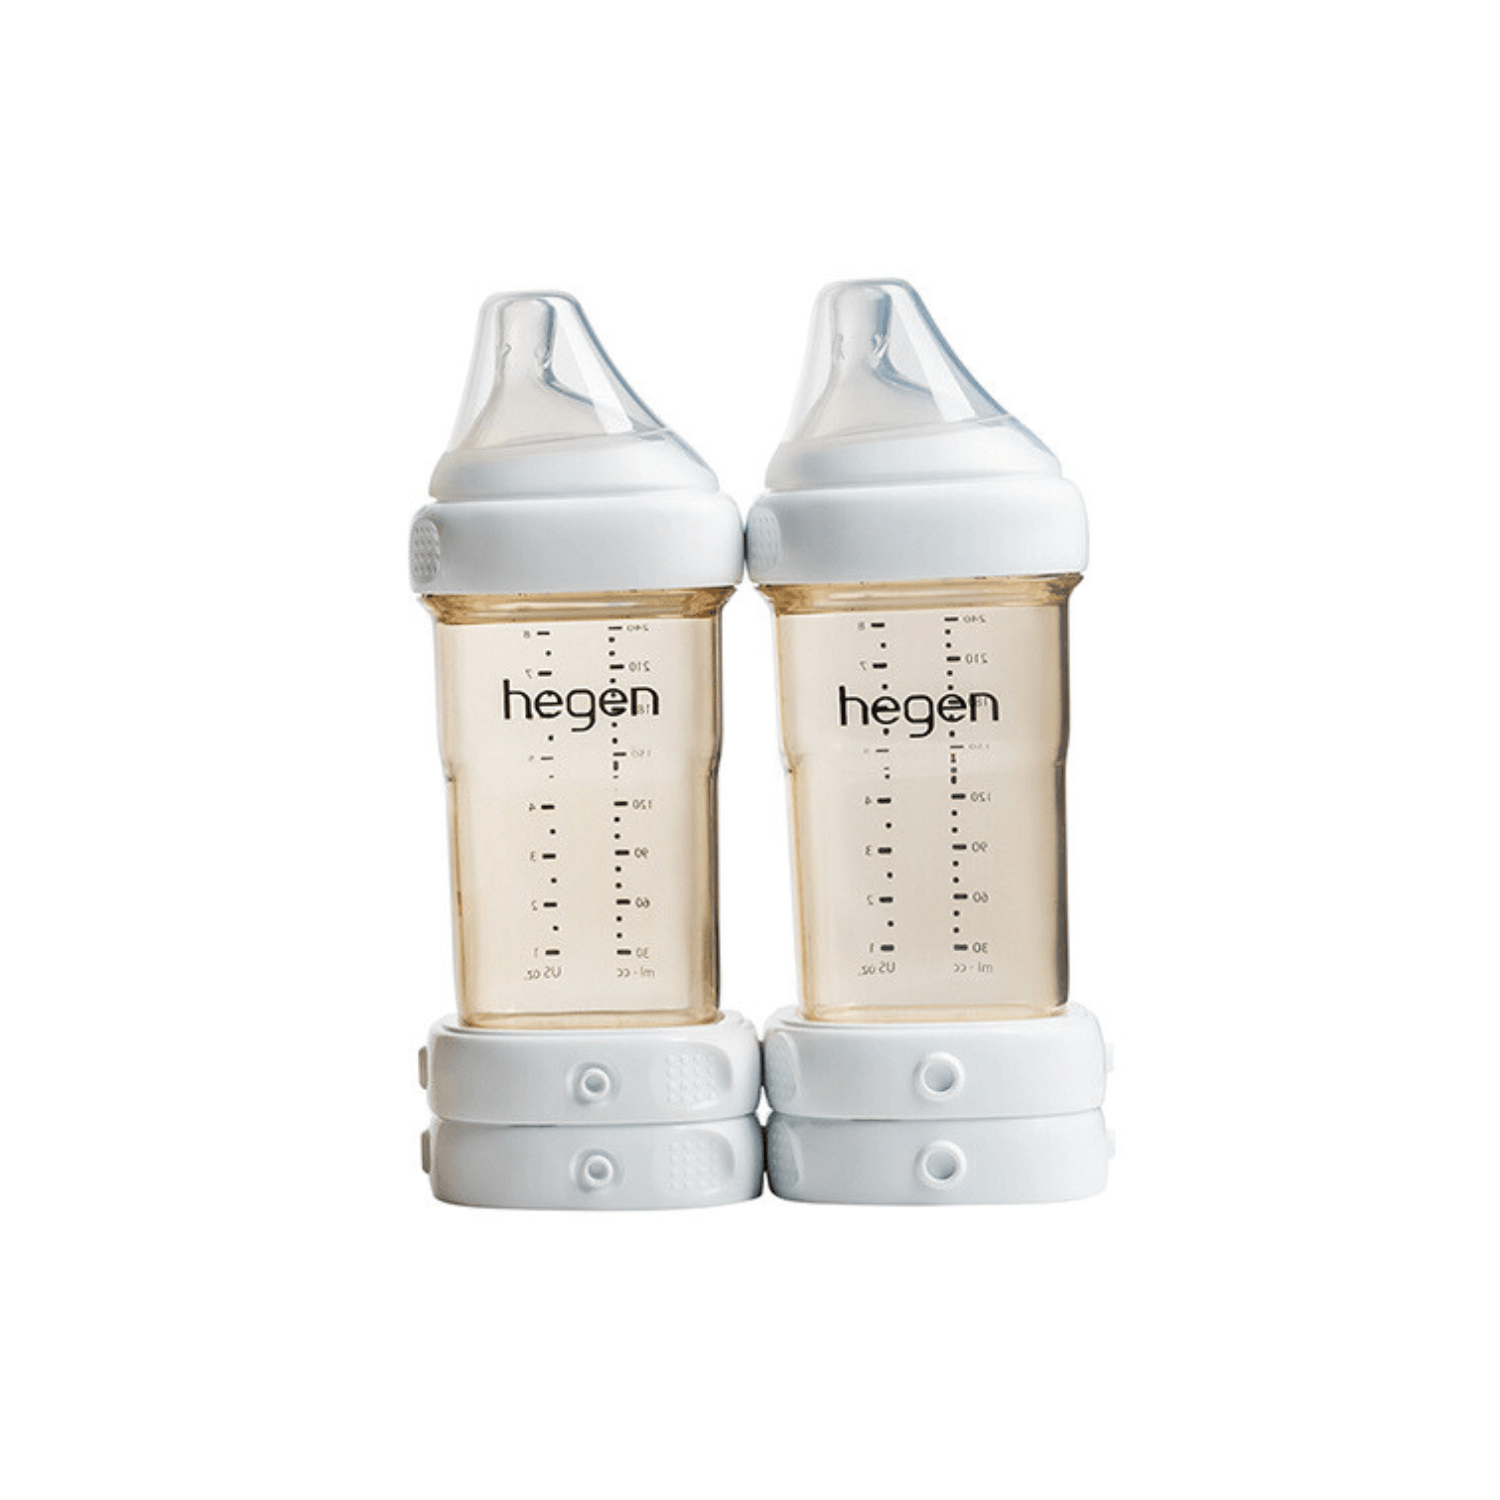 Hegen Express Store Feed Starter Bundle (Breast Pump & Feeding Bottles) Suitable for Newborn